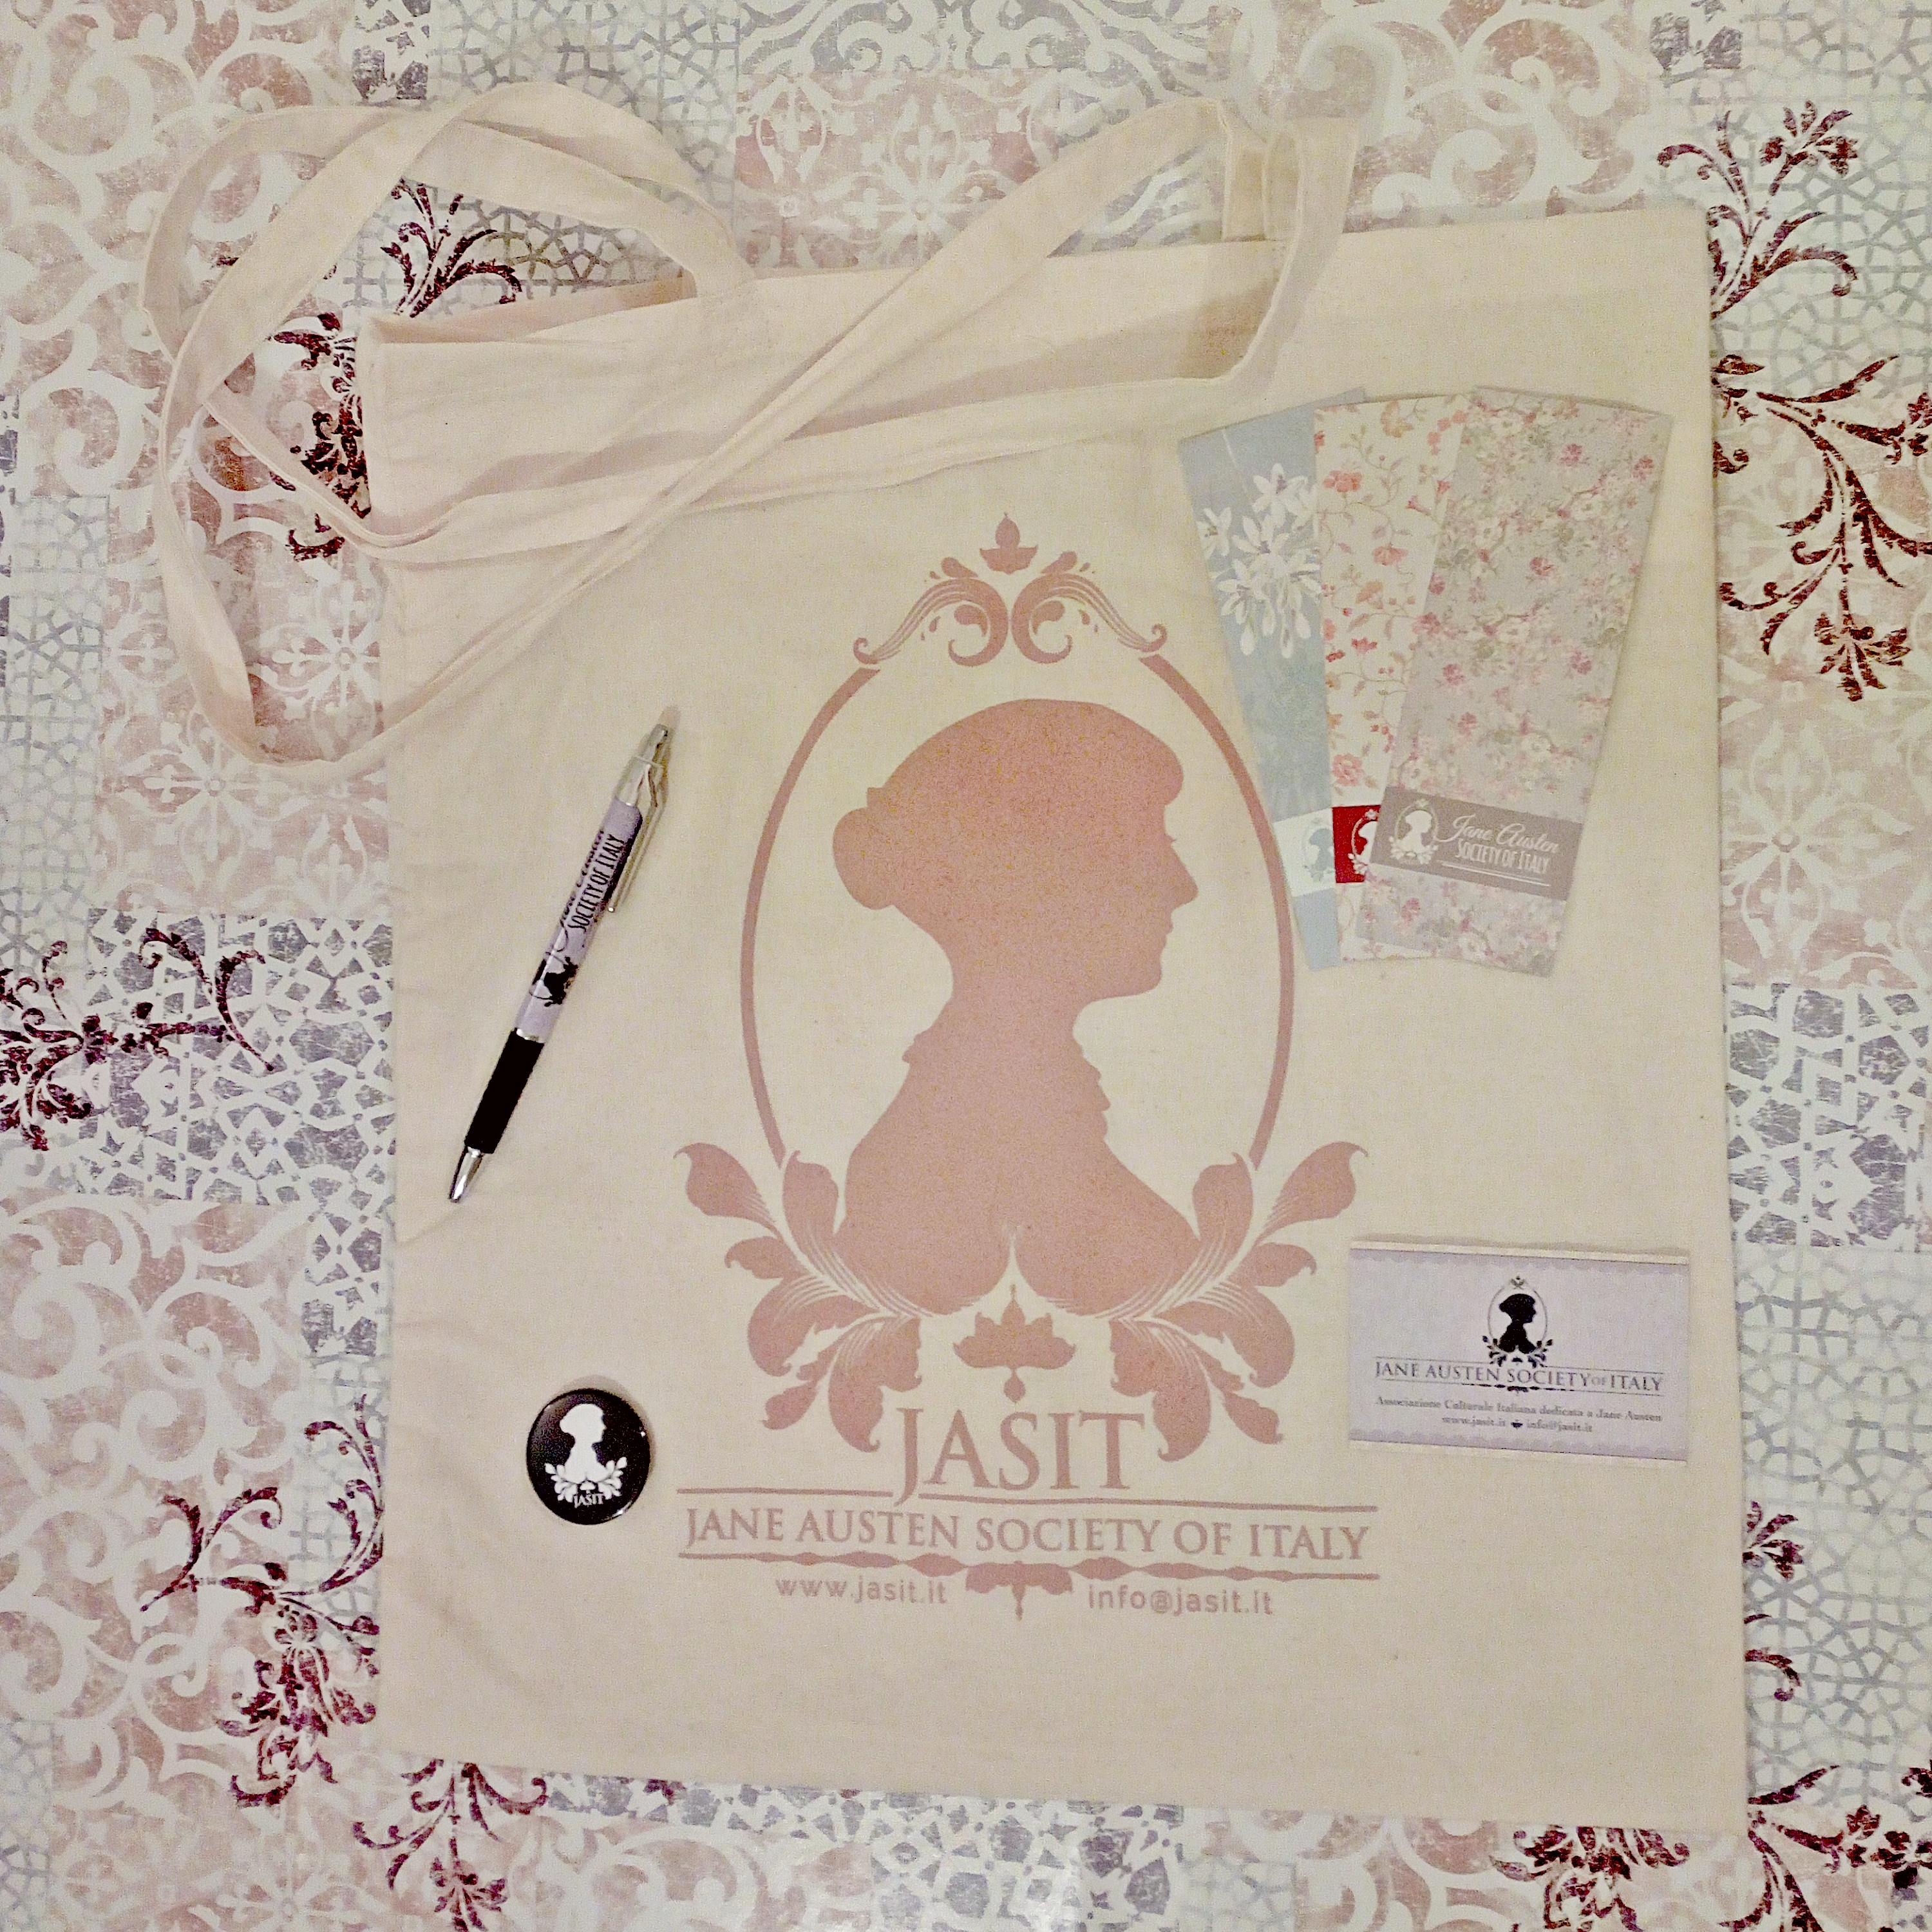 Un tè con Jane Austen - JASIT